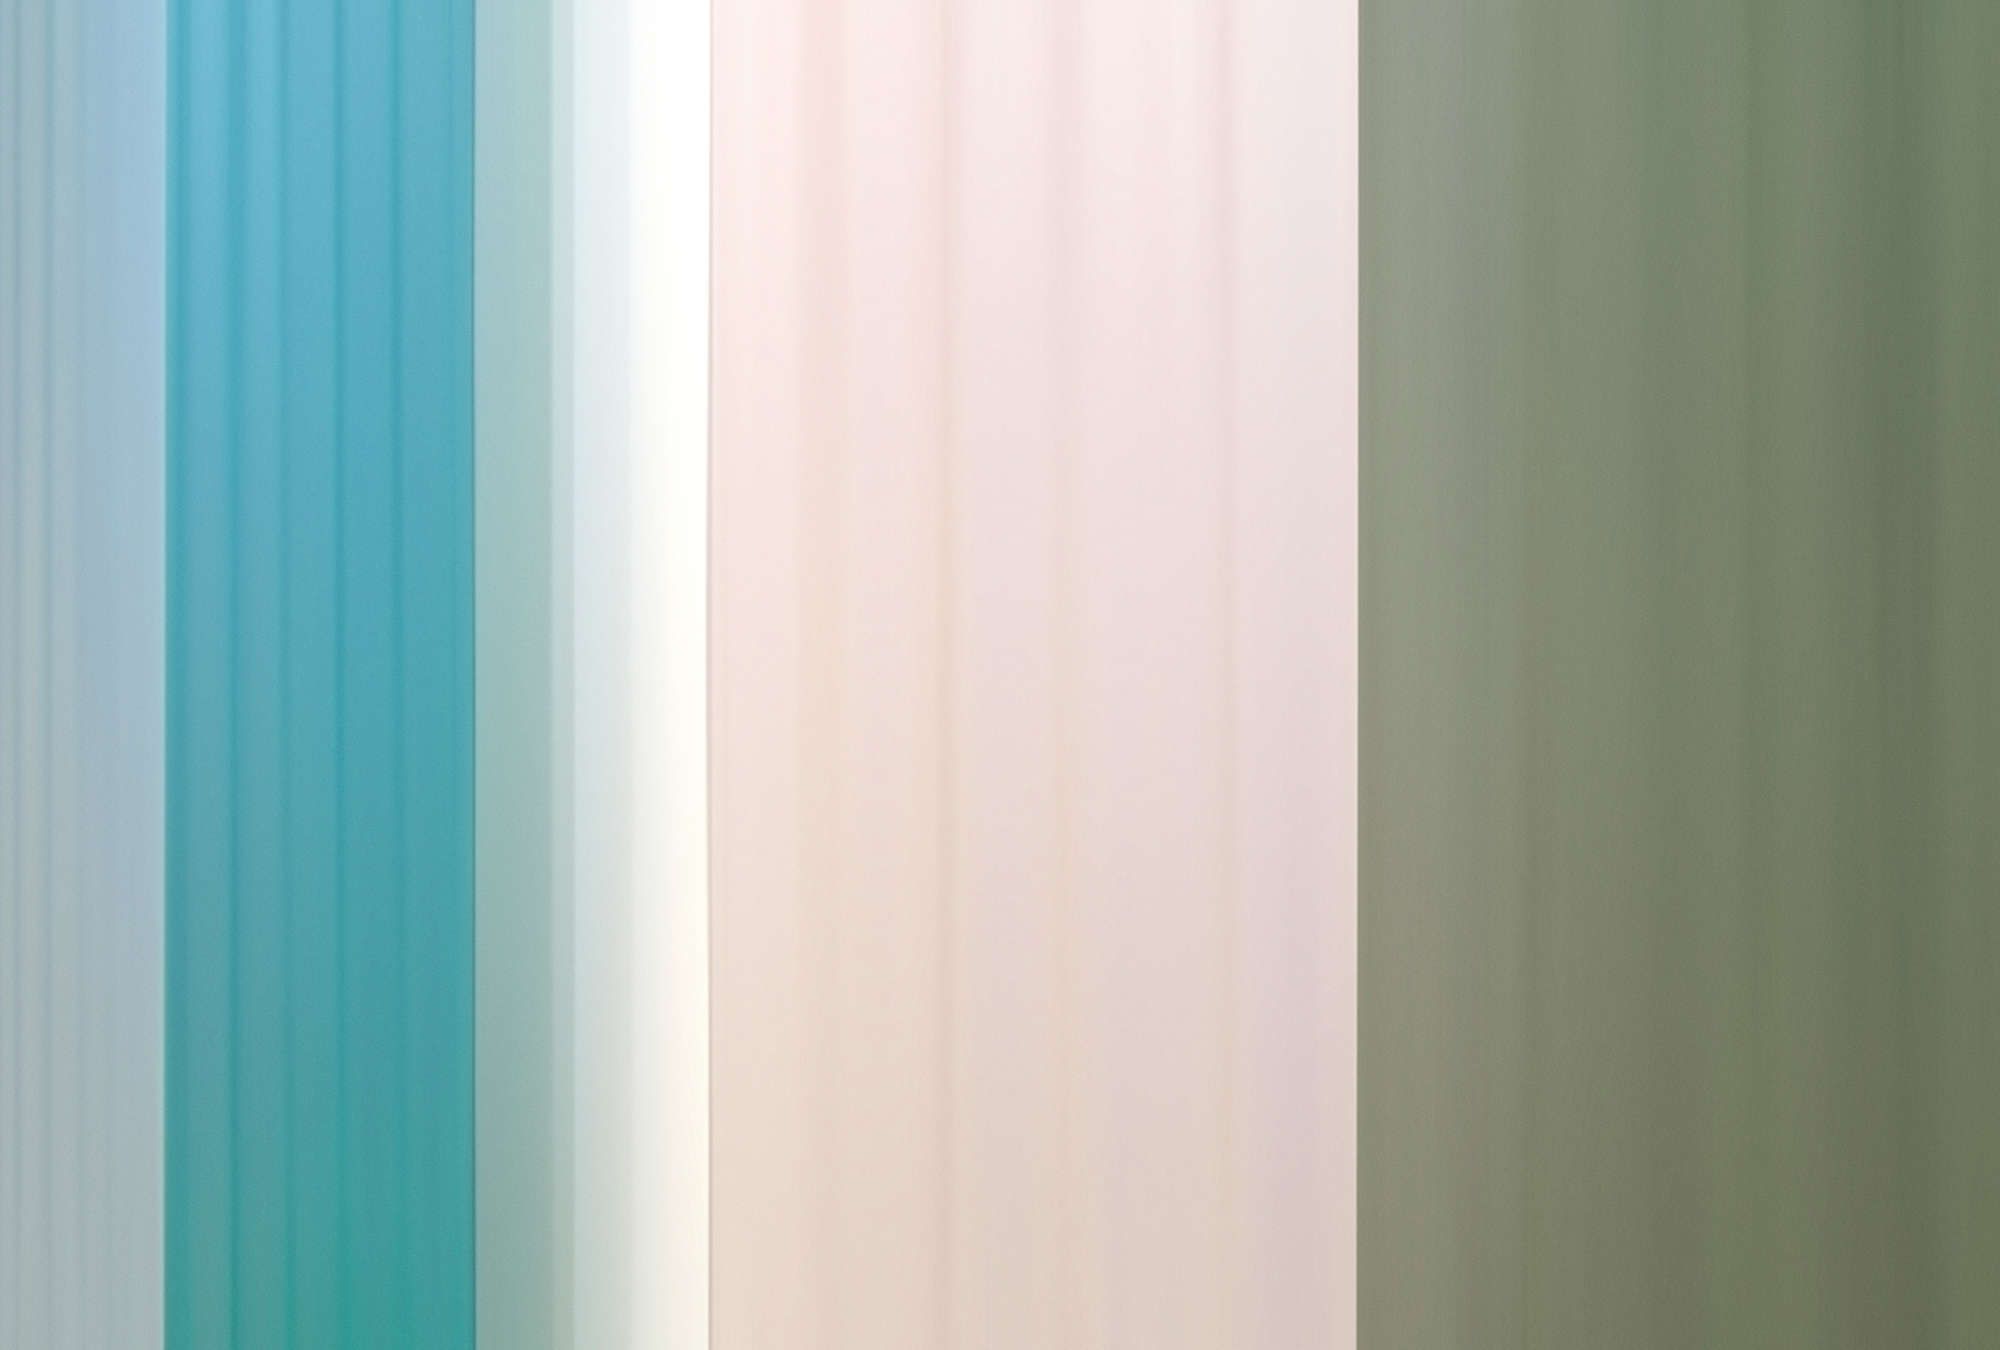             Fotomural »co-colores 4« - degradado de color con rayas - turquesa, crema, verde | mate, no tejido liso
        